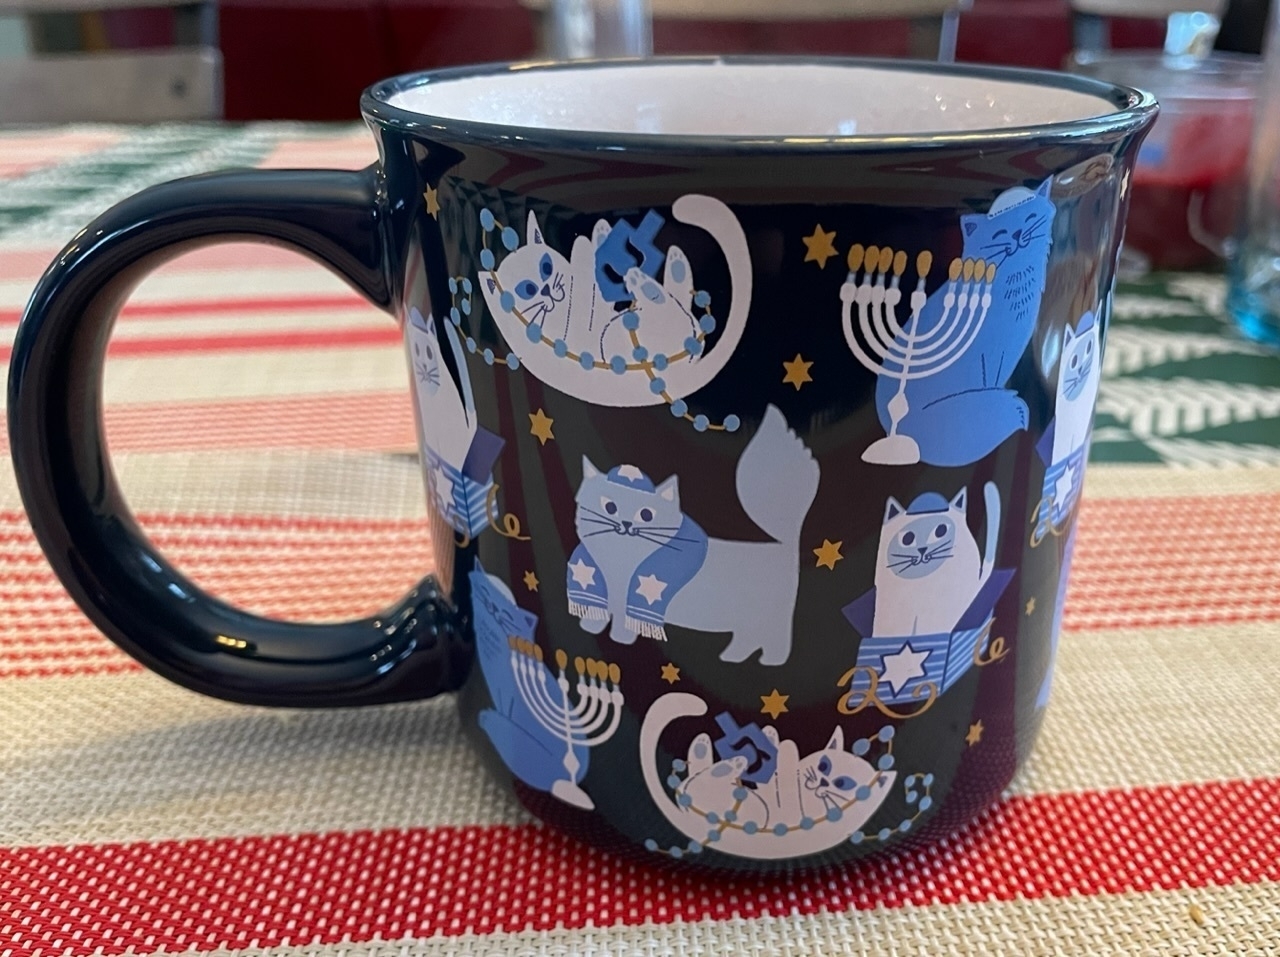 Mug with happy cats wearing Jewish clothing surrounded by menorahs.